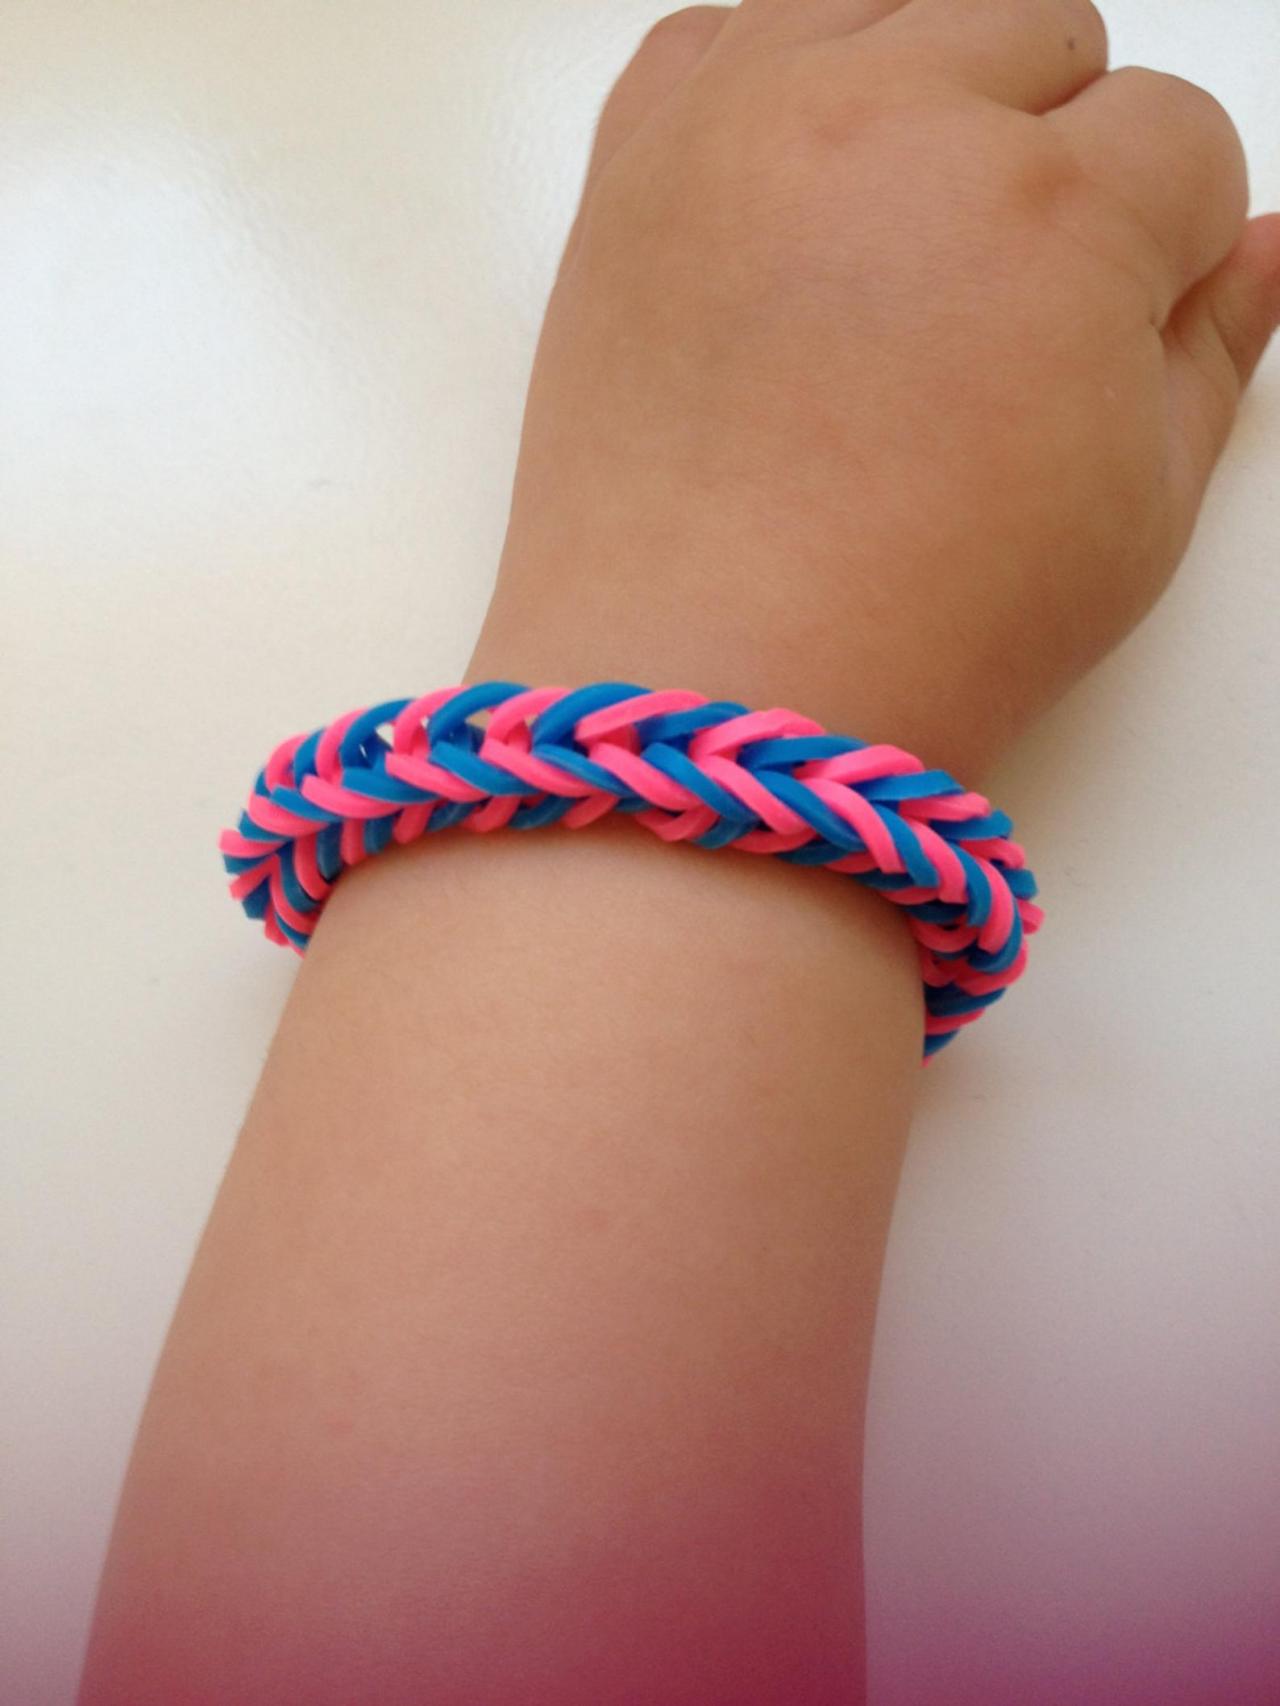 Little girl bracelet 73- little girl fashion rubber bands jewelry for Kids blue pink.